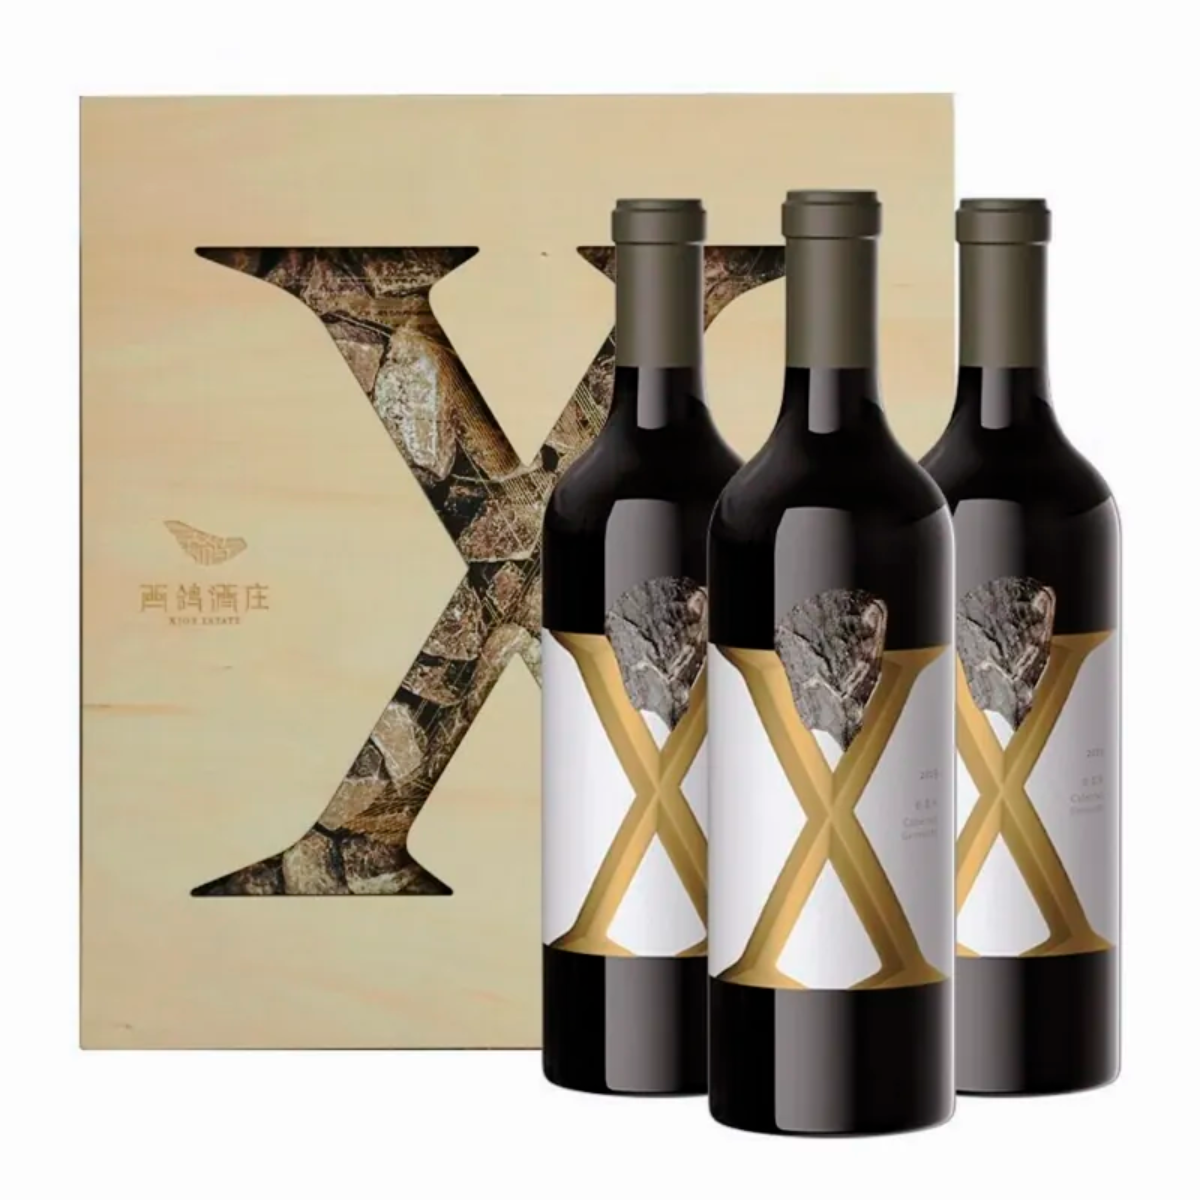 Xige “X” Cabernet Gernischt Cabernet Gernischt 2019 (with box) 西鴿“X”蛇龍珠乾紅葡萄酒2019 (連木盒)